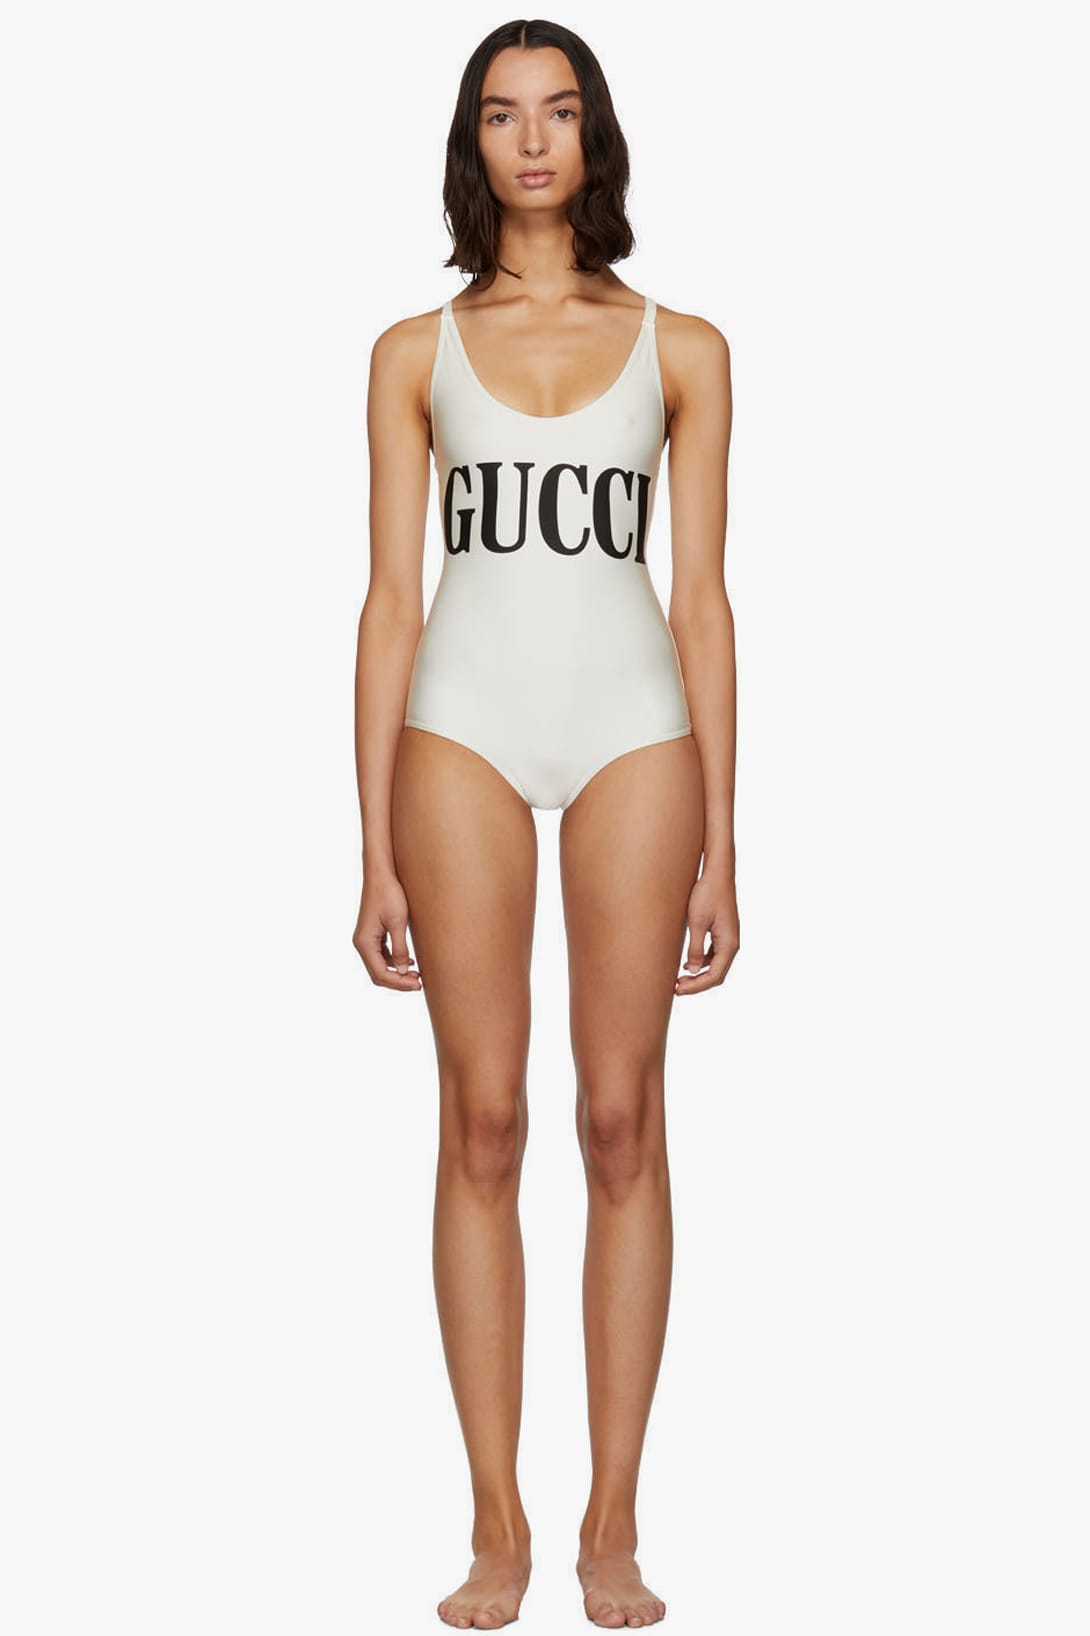 gucci logo swimsuit